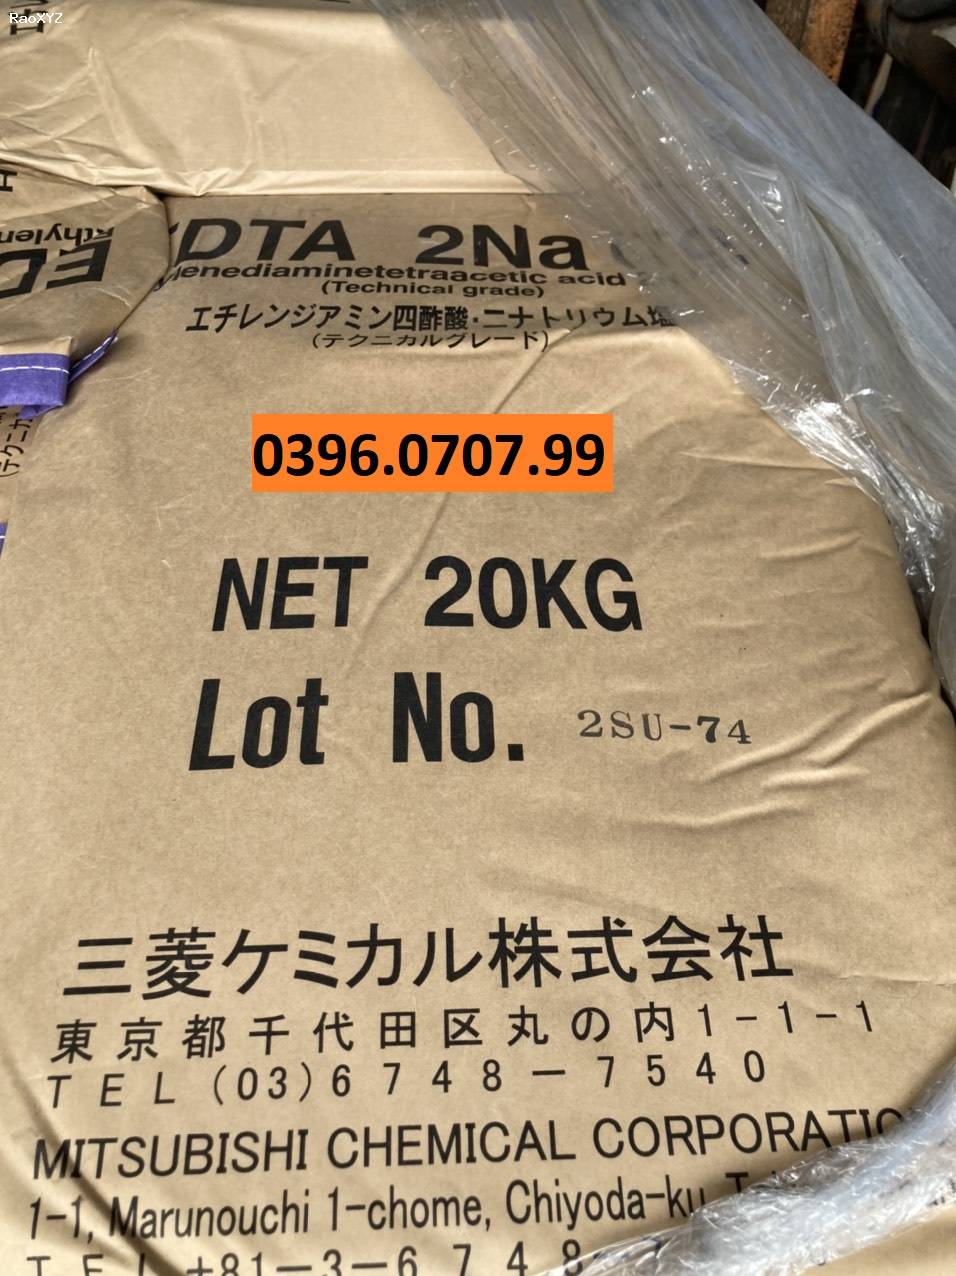 Hóa chất EDTA 2Na (EDTA 2 Muối) - Mitsubishi Nhật bao 20kg - Ethylendiamin Tetraacetic Acid